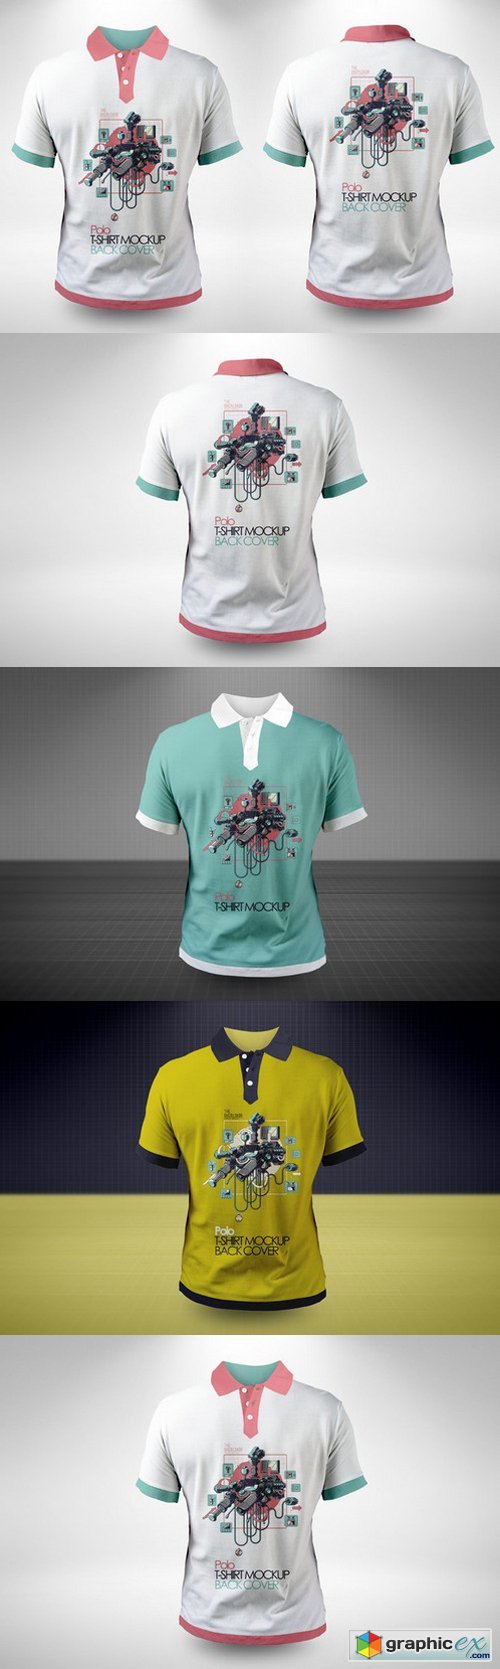 Polo T-shirt Back & Front Mock-ups